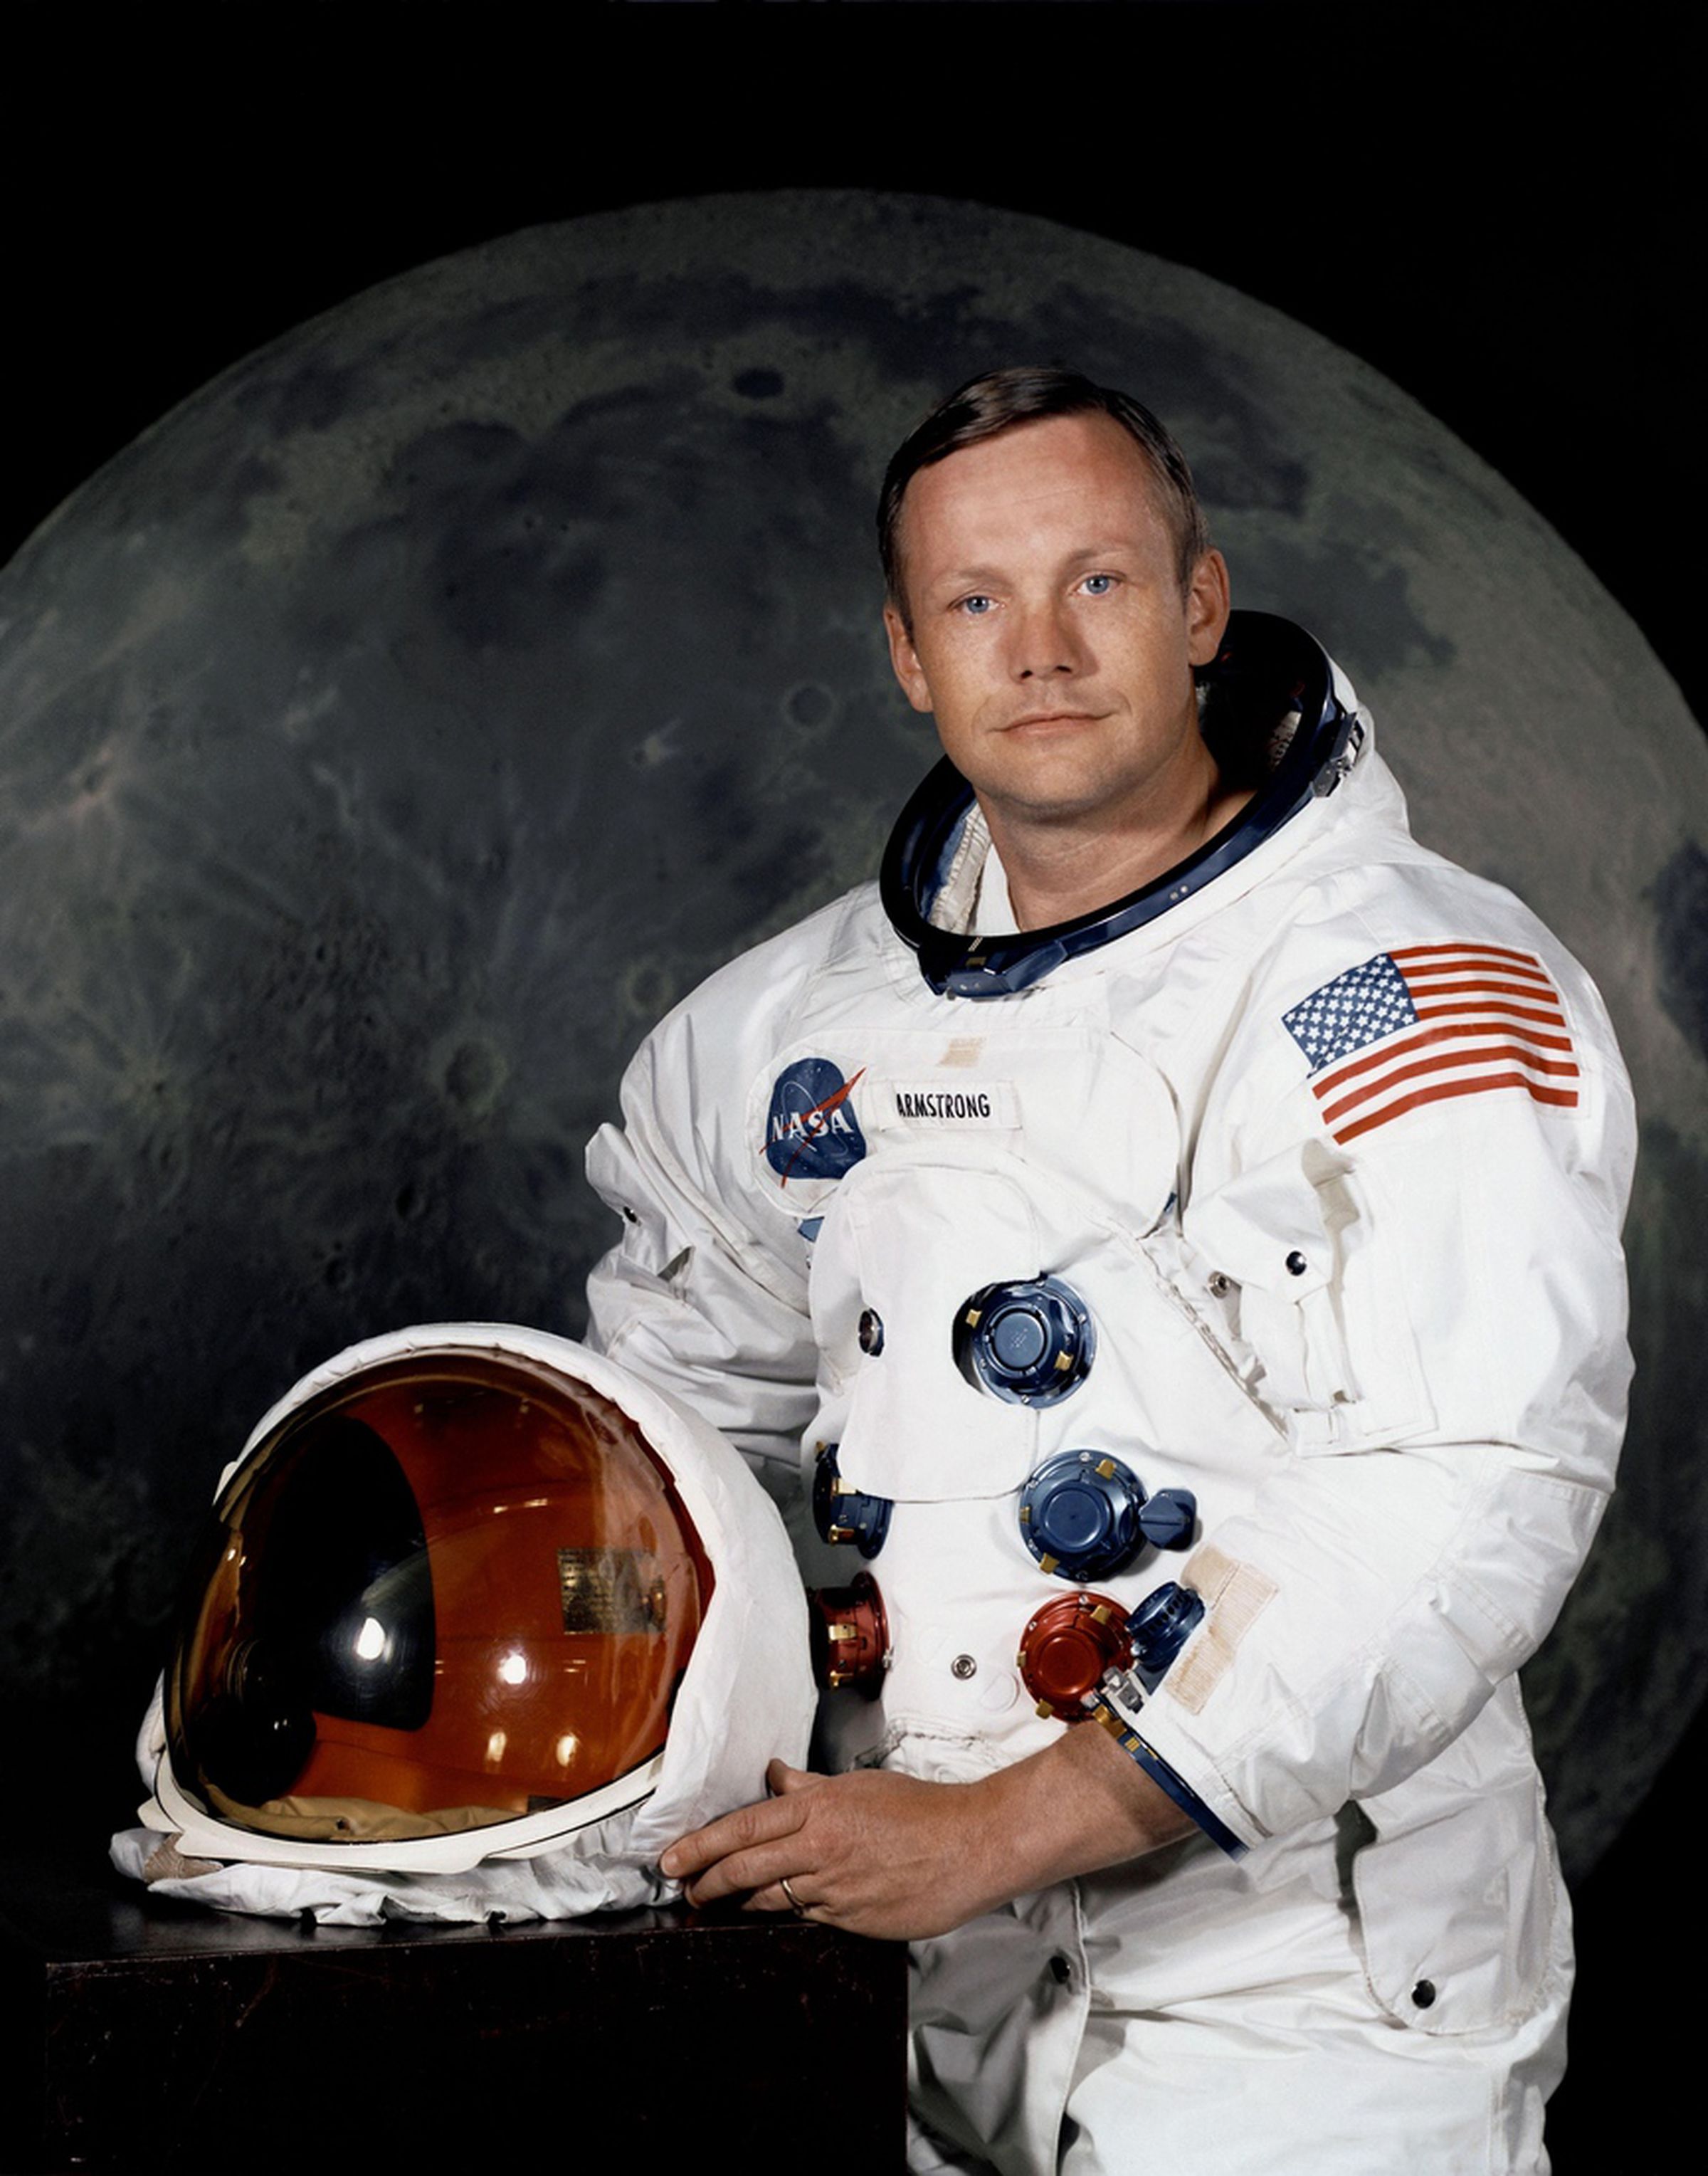 Astronaut Neil Armstrong, 1930-2012